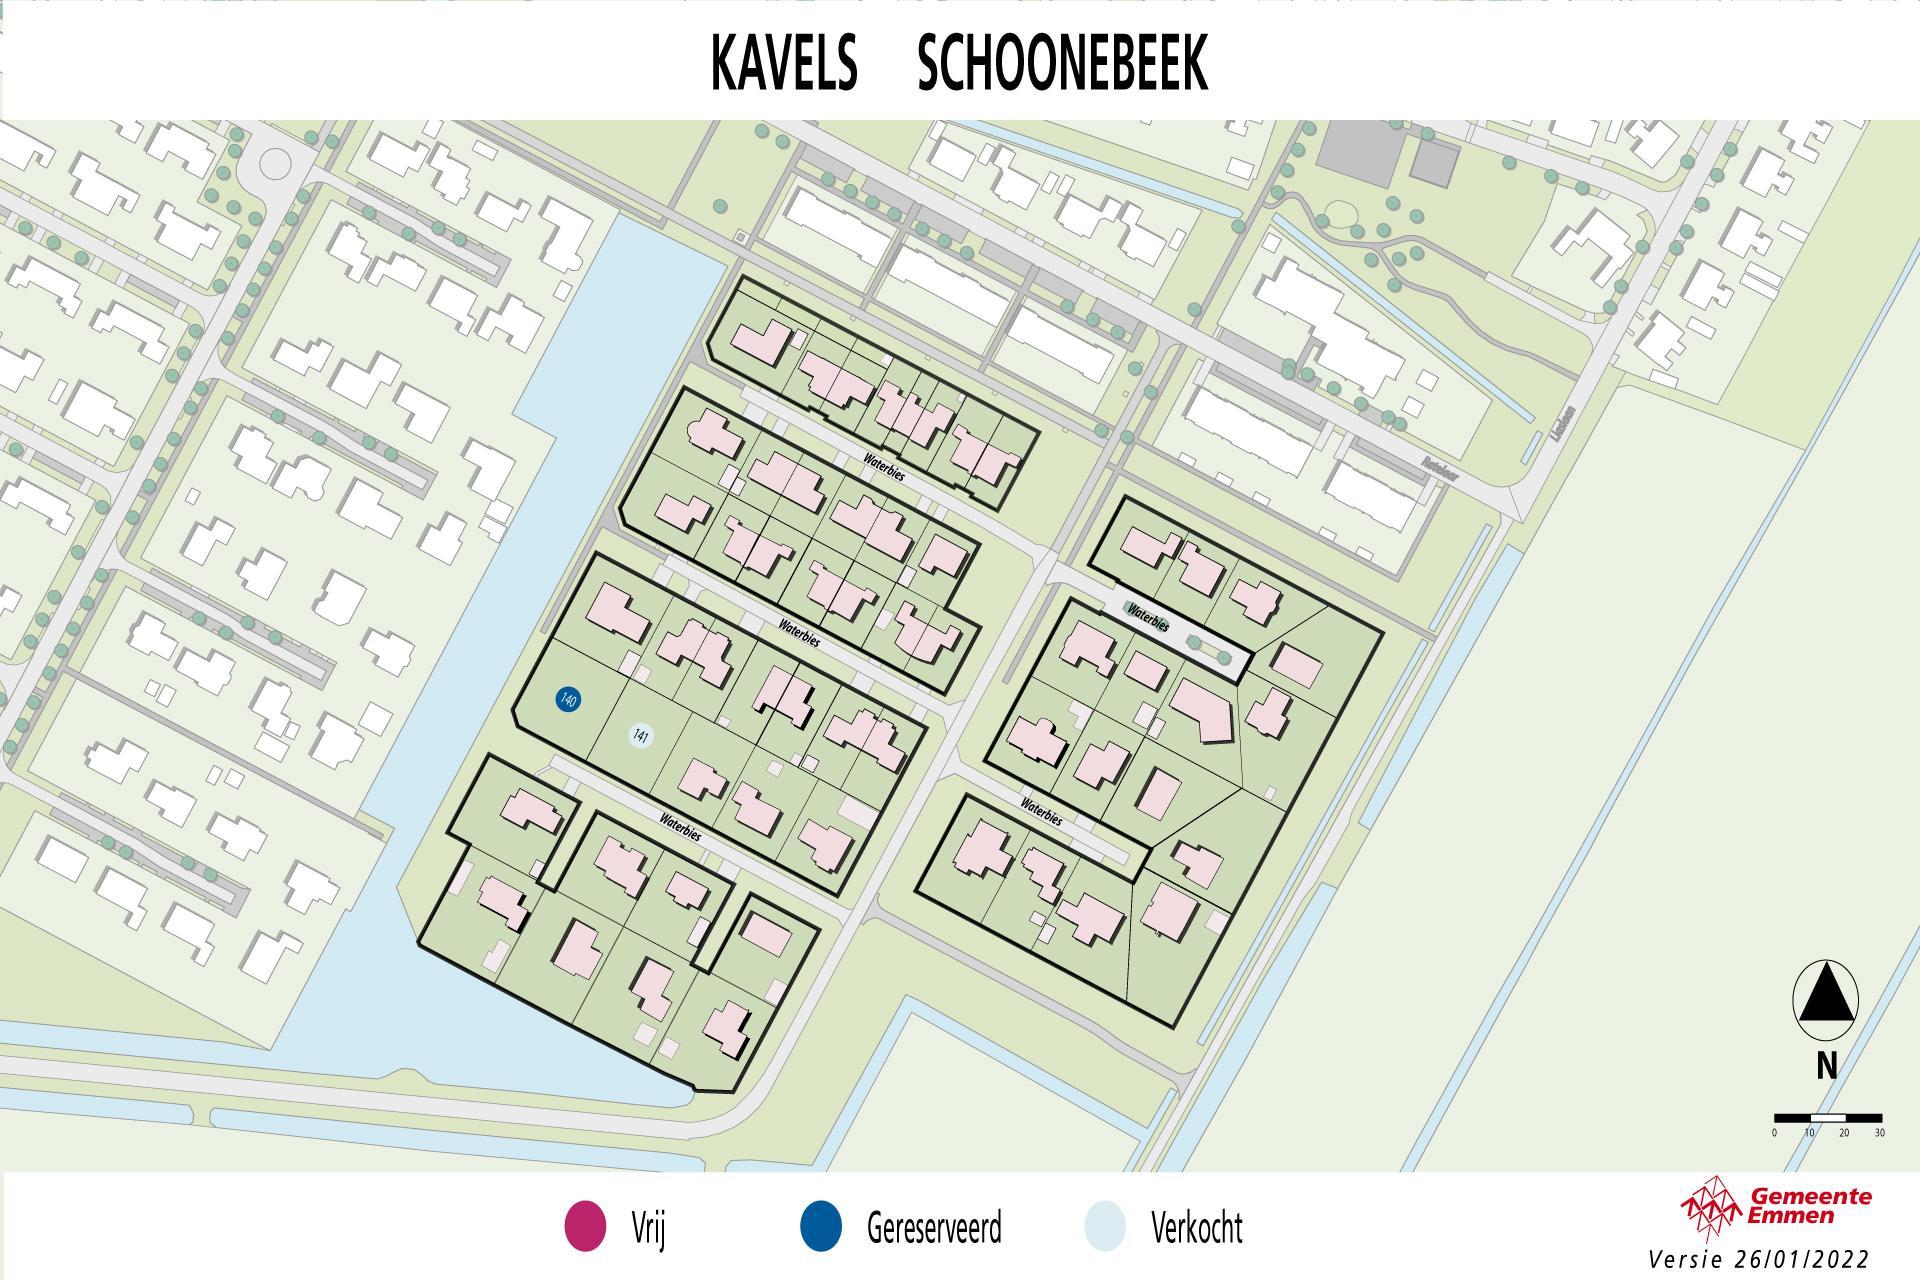 Kaart met kavels in Schoonebeek